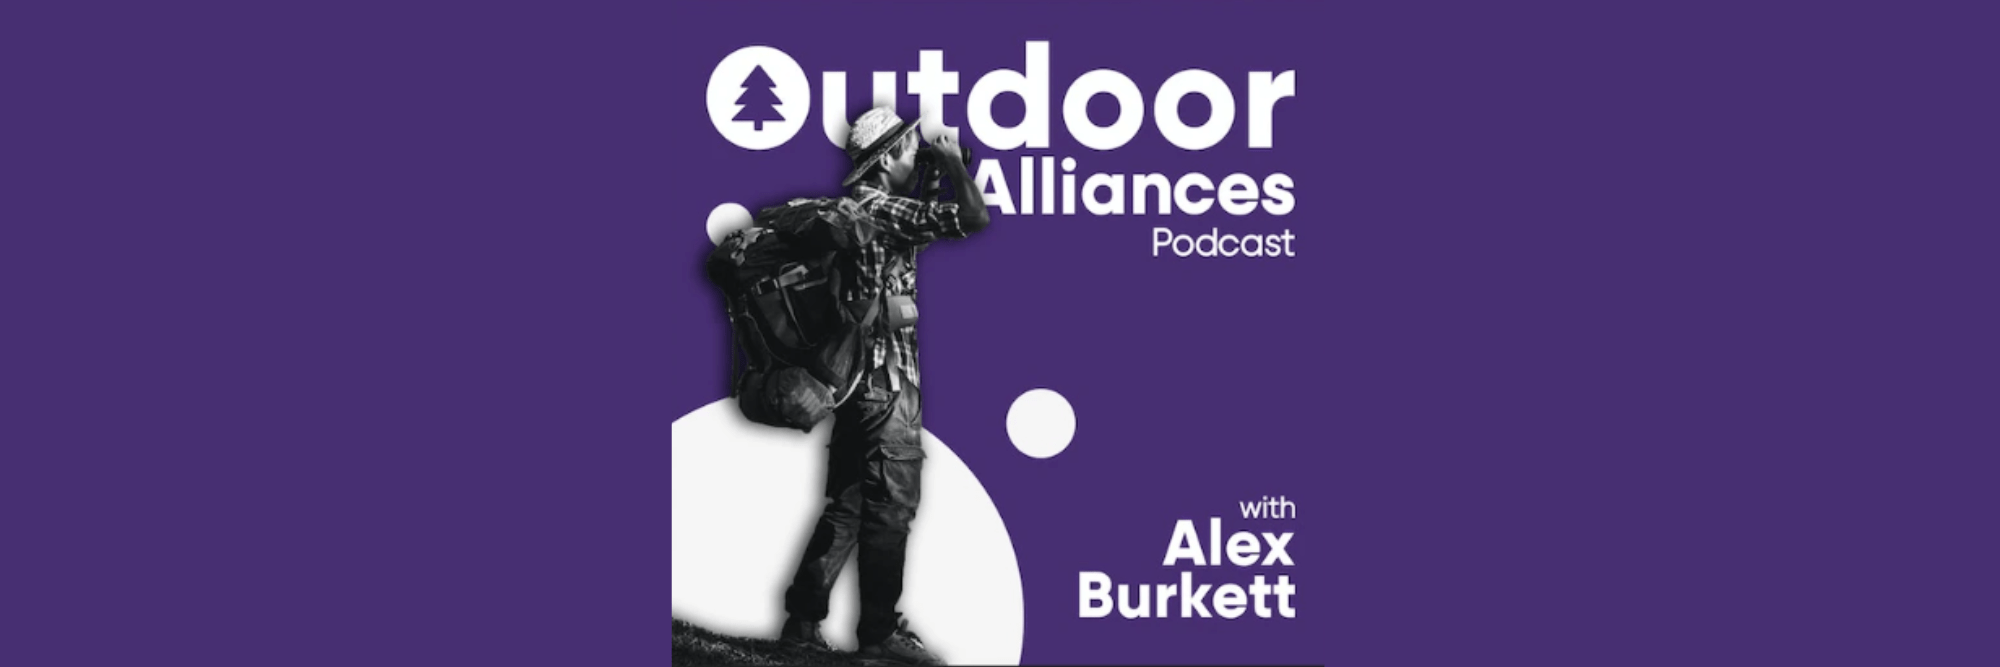 Blog Banner Outdoor Alliances Podcast with Alex Burkett